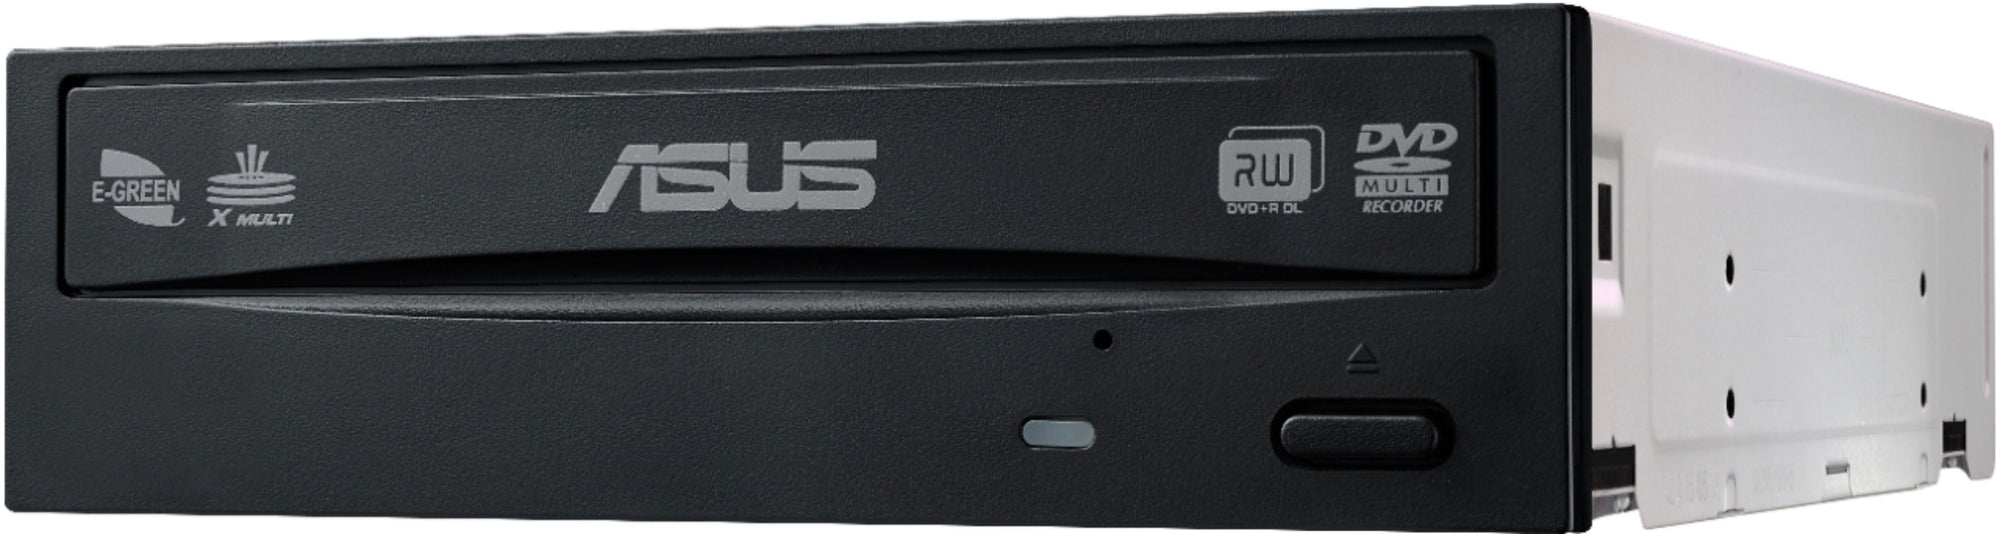 Asus - DRW-24B3ST 24X Internal DVD RW Drive - Black